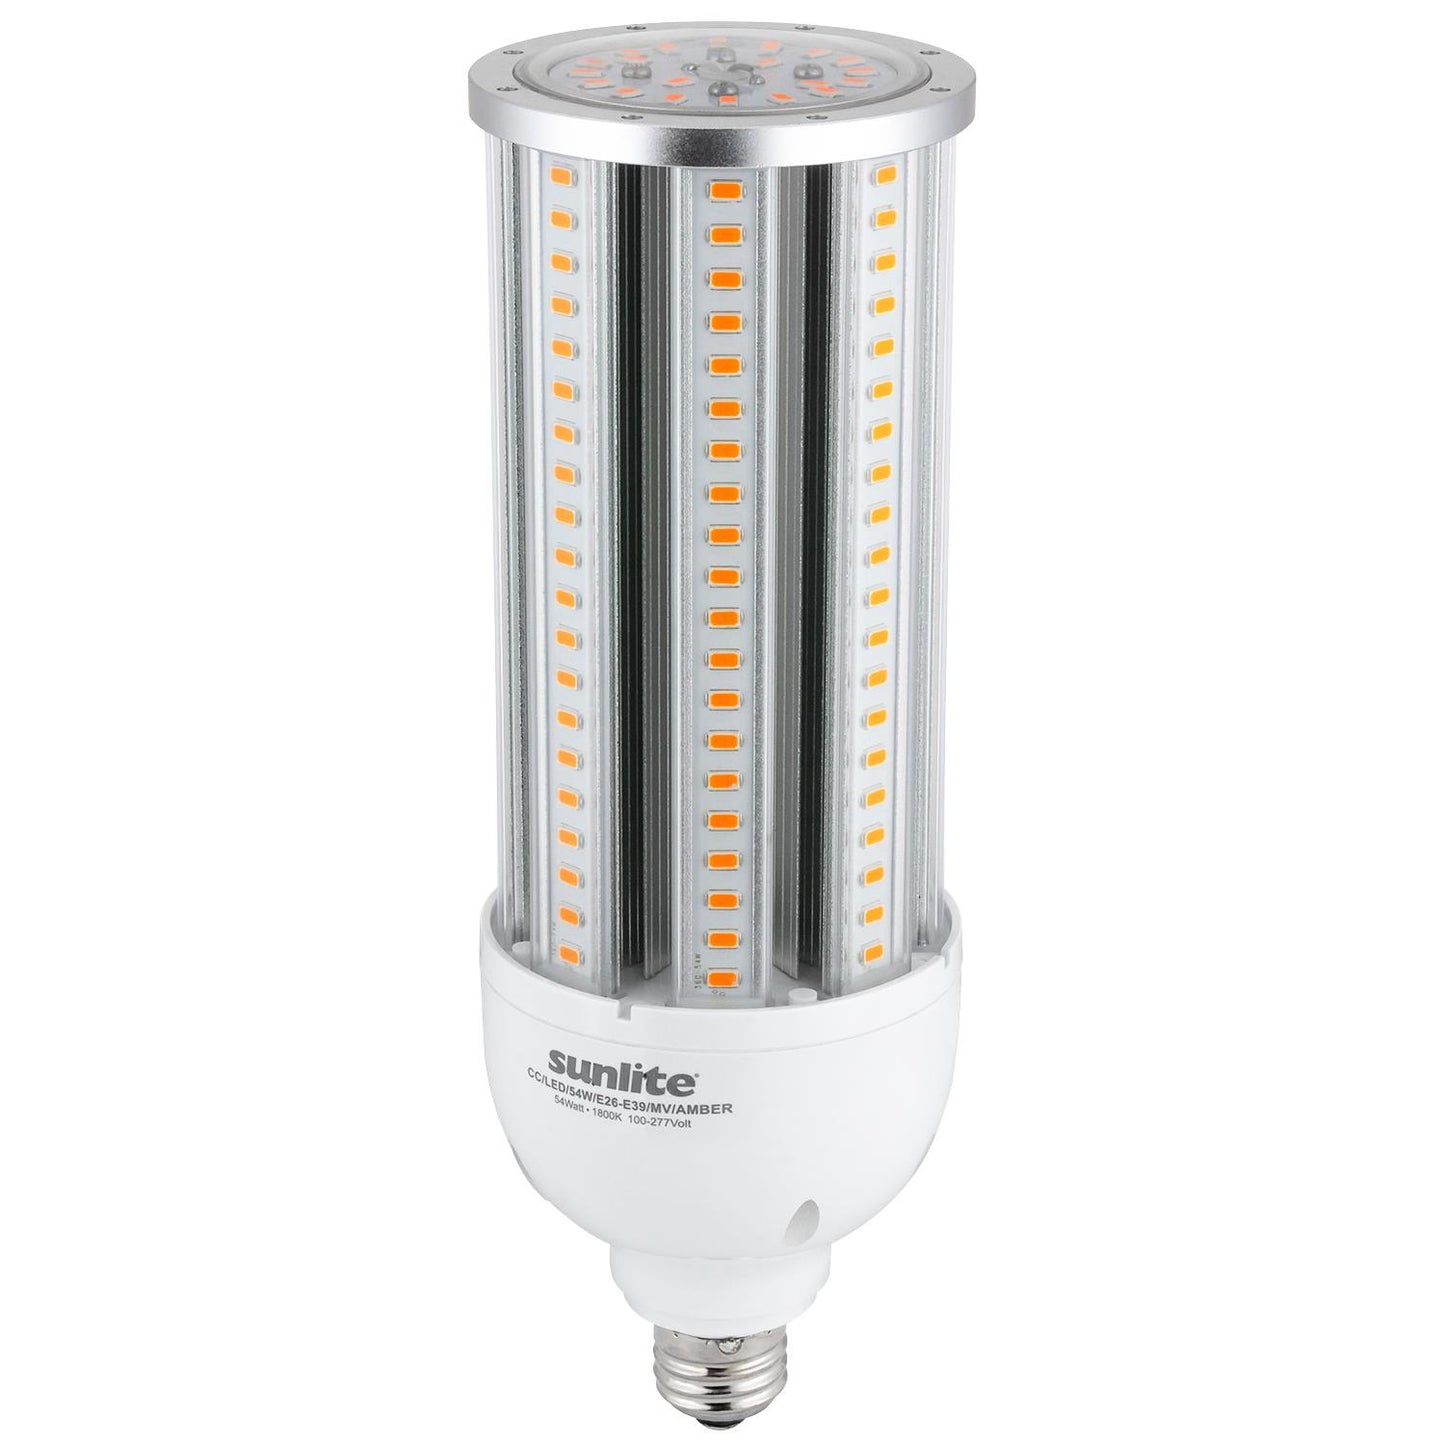 Sunlite LED Corn Bulb 54W (85 -125W Equivalent) Light Bulb Medium (E26) Base,